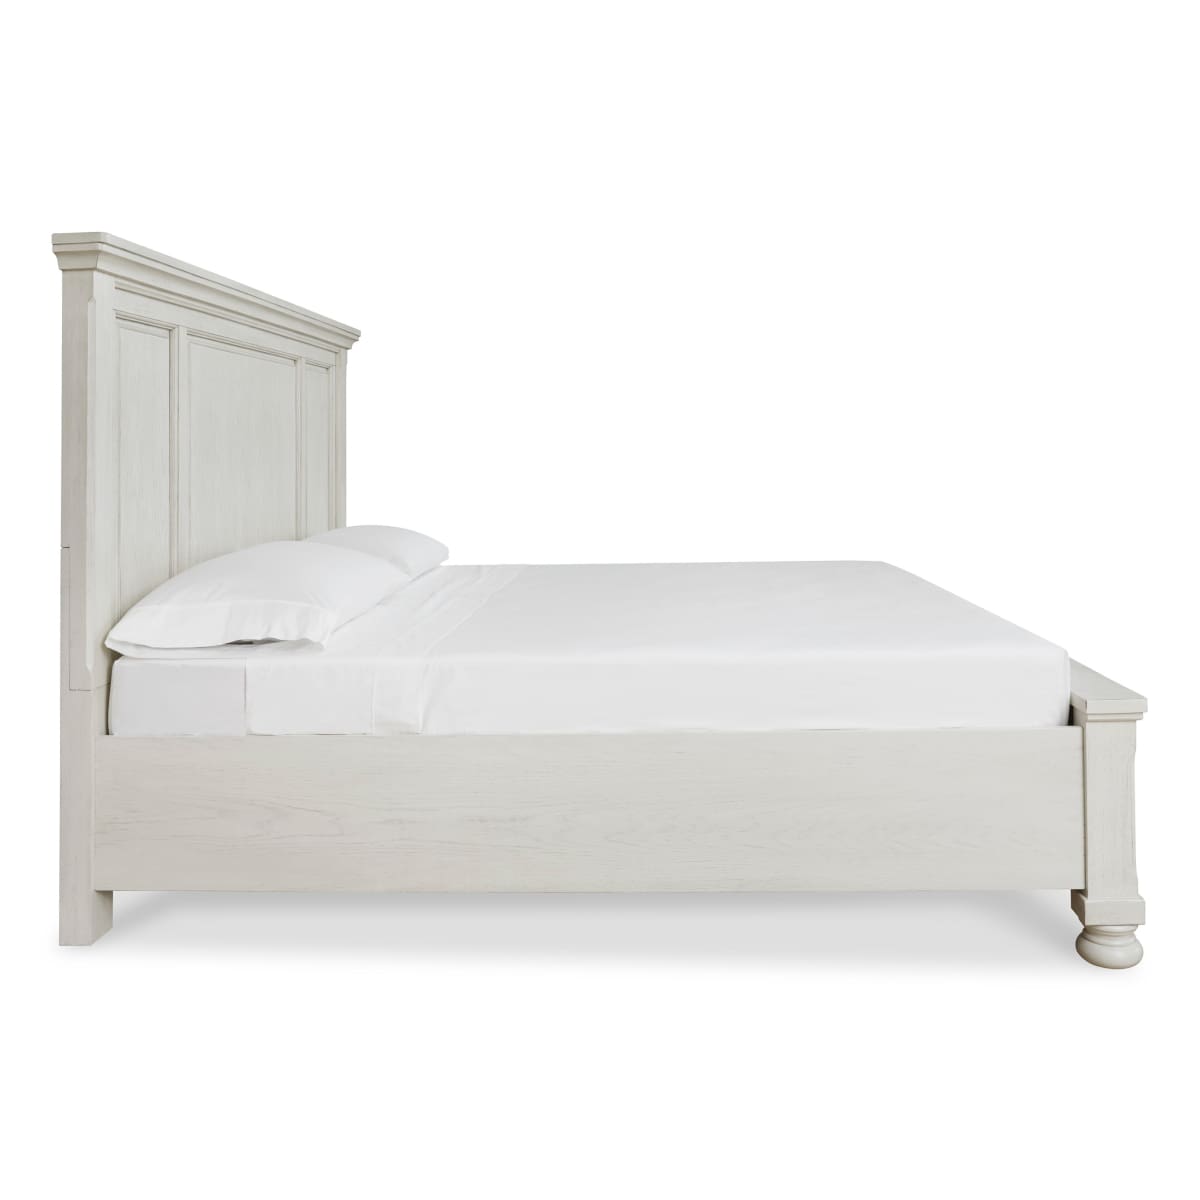 Robbinsdale King Panel Storage Bed - $1499.99 - bed